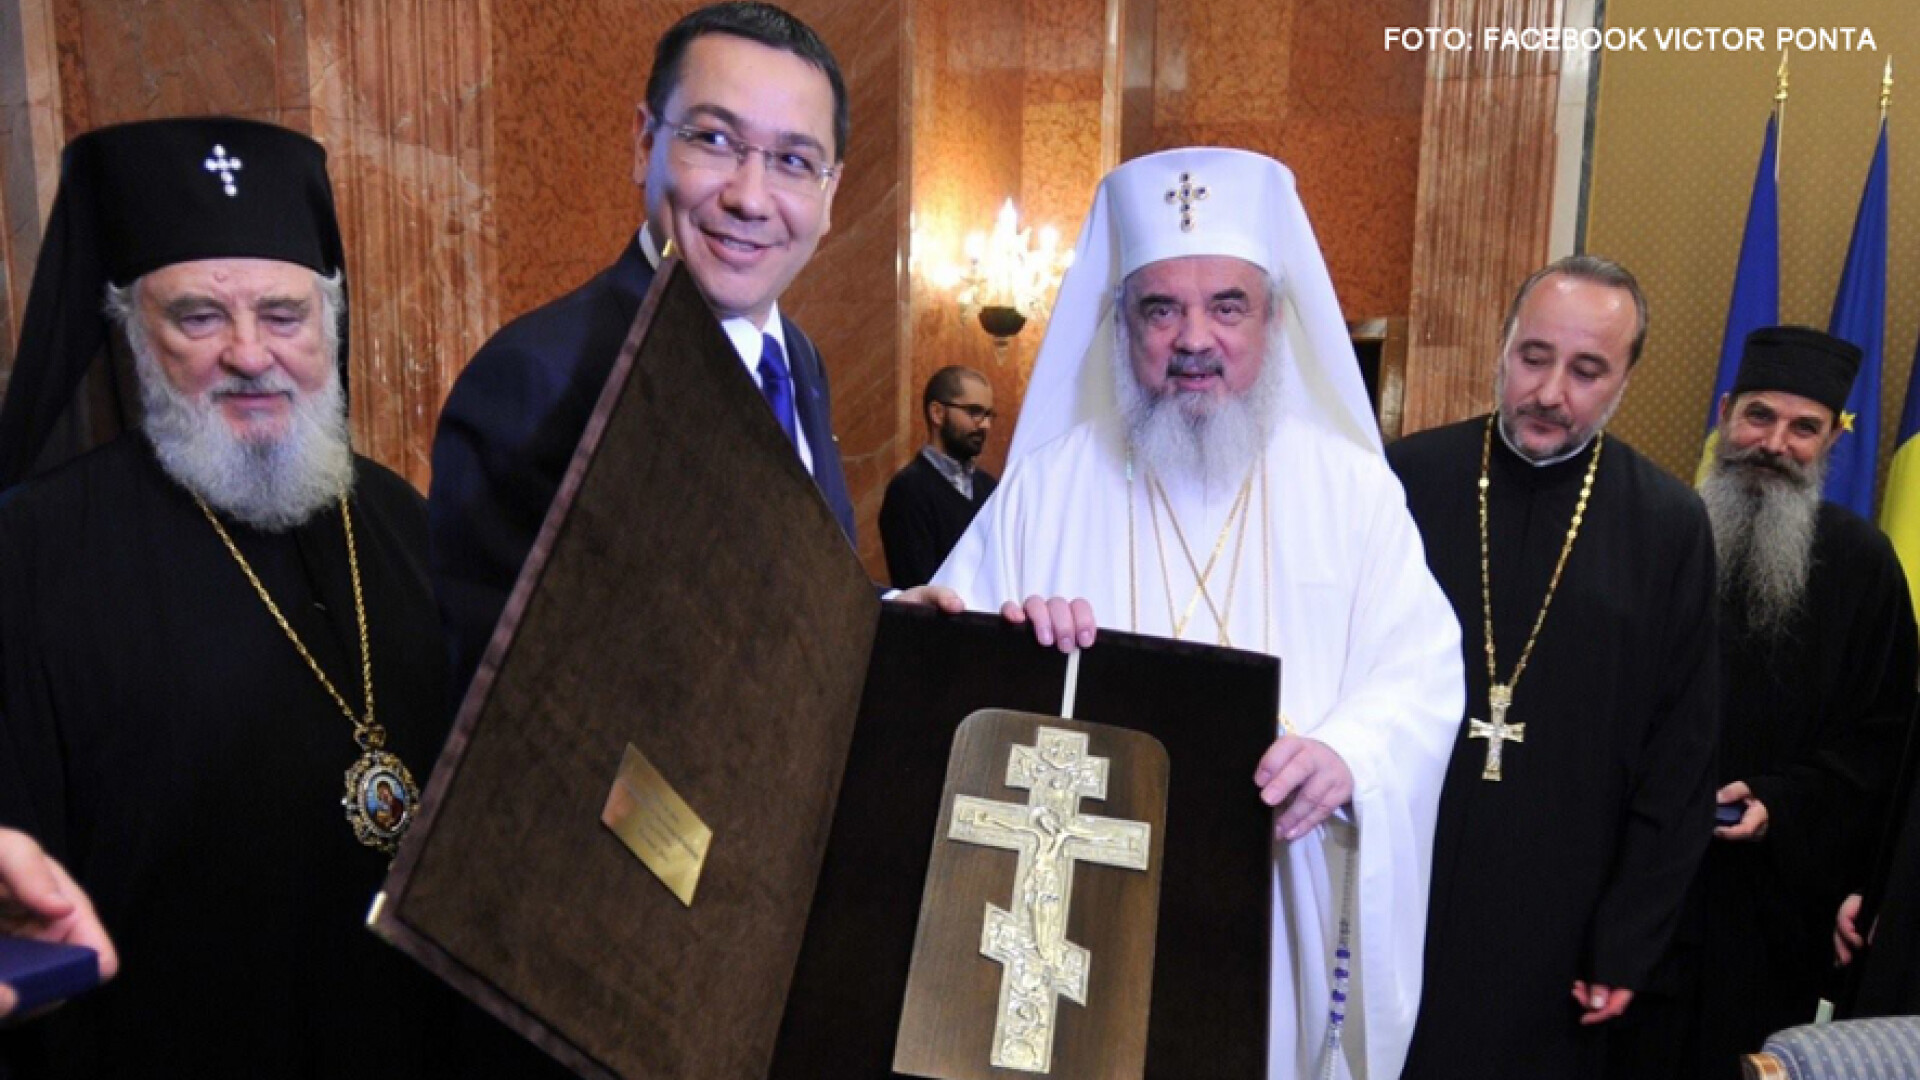 Victor Ponta cu patriarhul Daniel, popi si o biblie